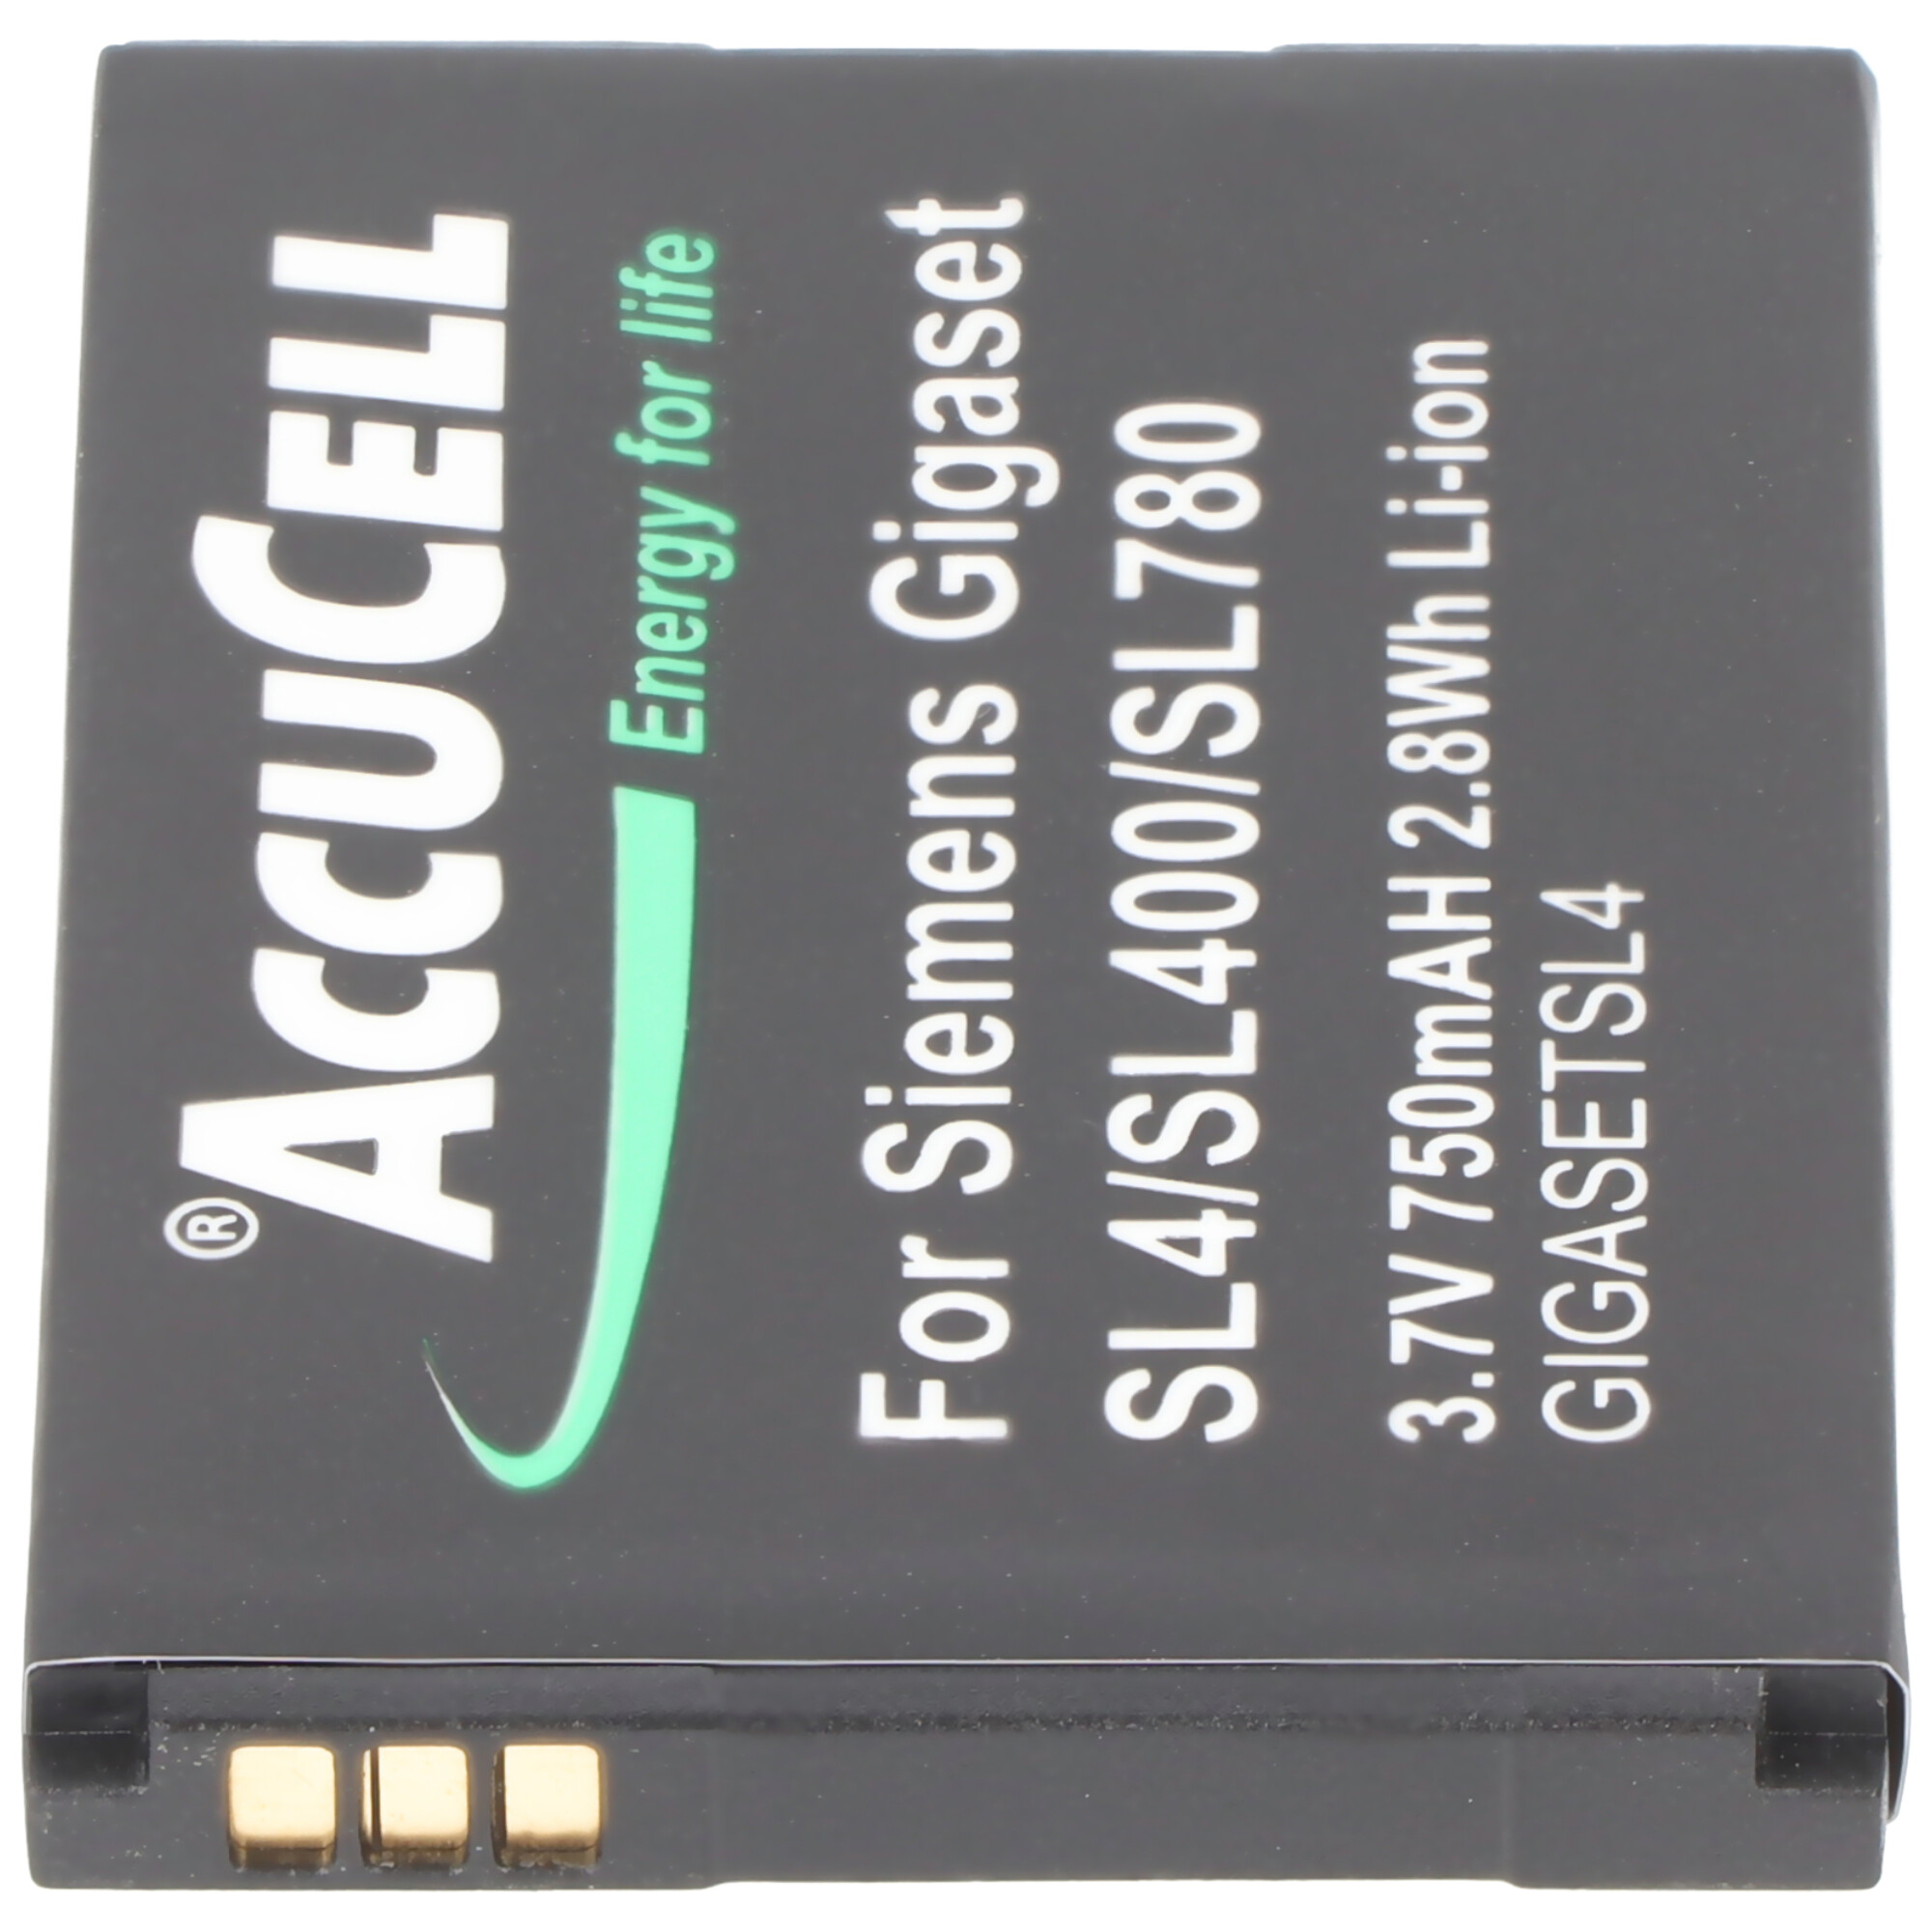 AccuCell Akku passend für Siemens SL4, SL400, SL78, SL780, SL785, SL788